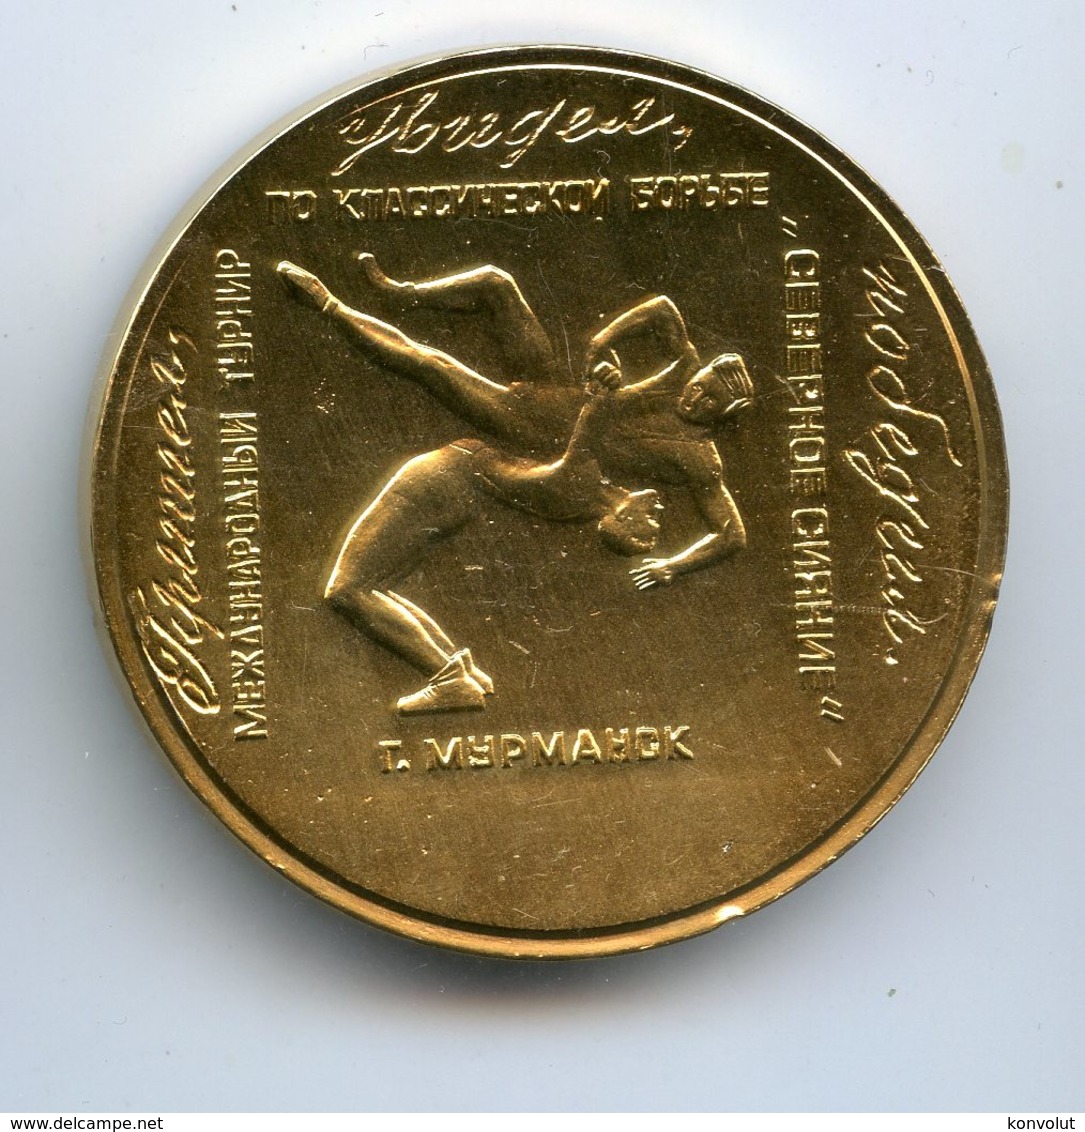 LUTTE RINGEN International Tournament Murmansk 1980 Wrestling Medaille Medal - Habillement, Souvenirs & Autres